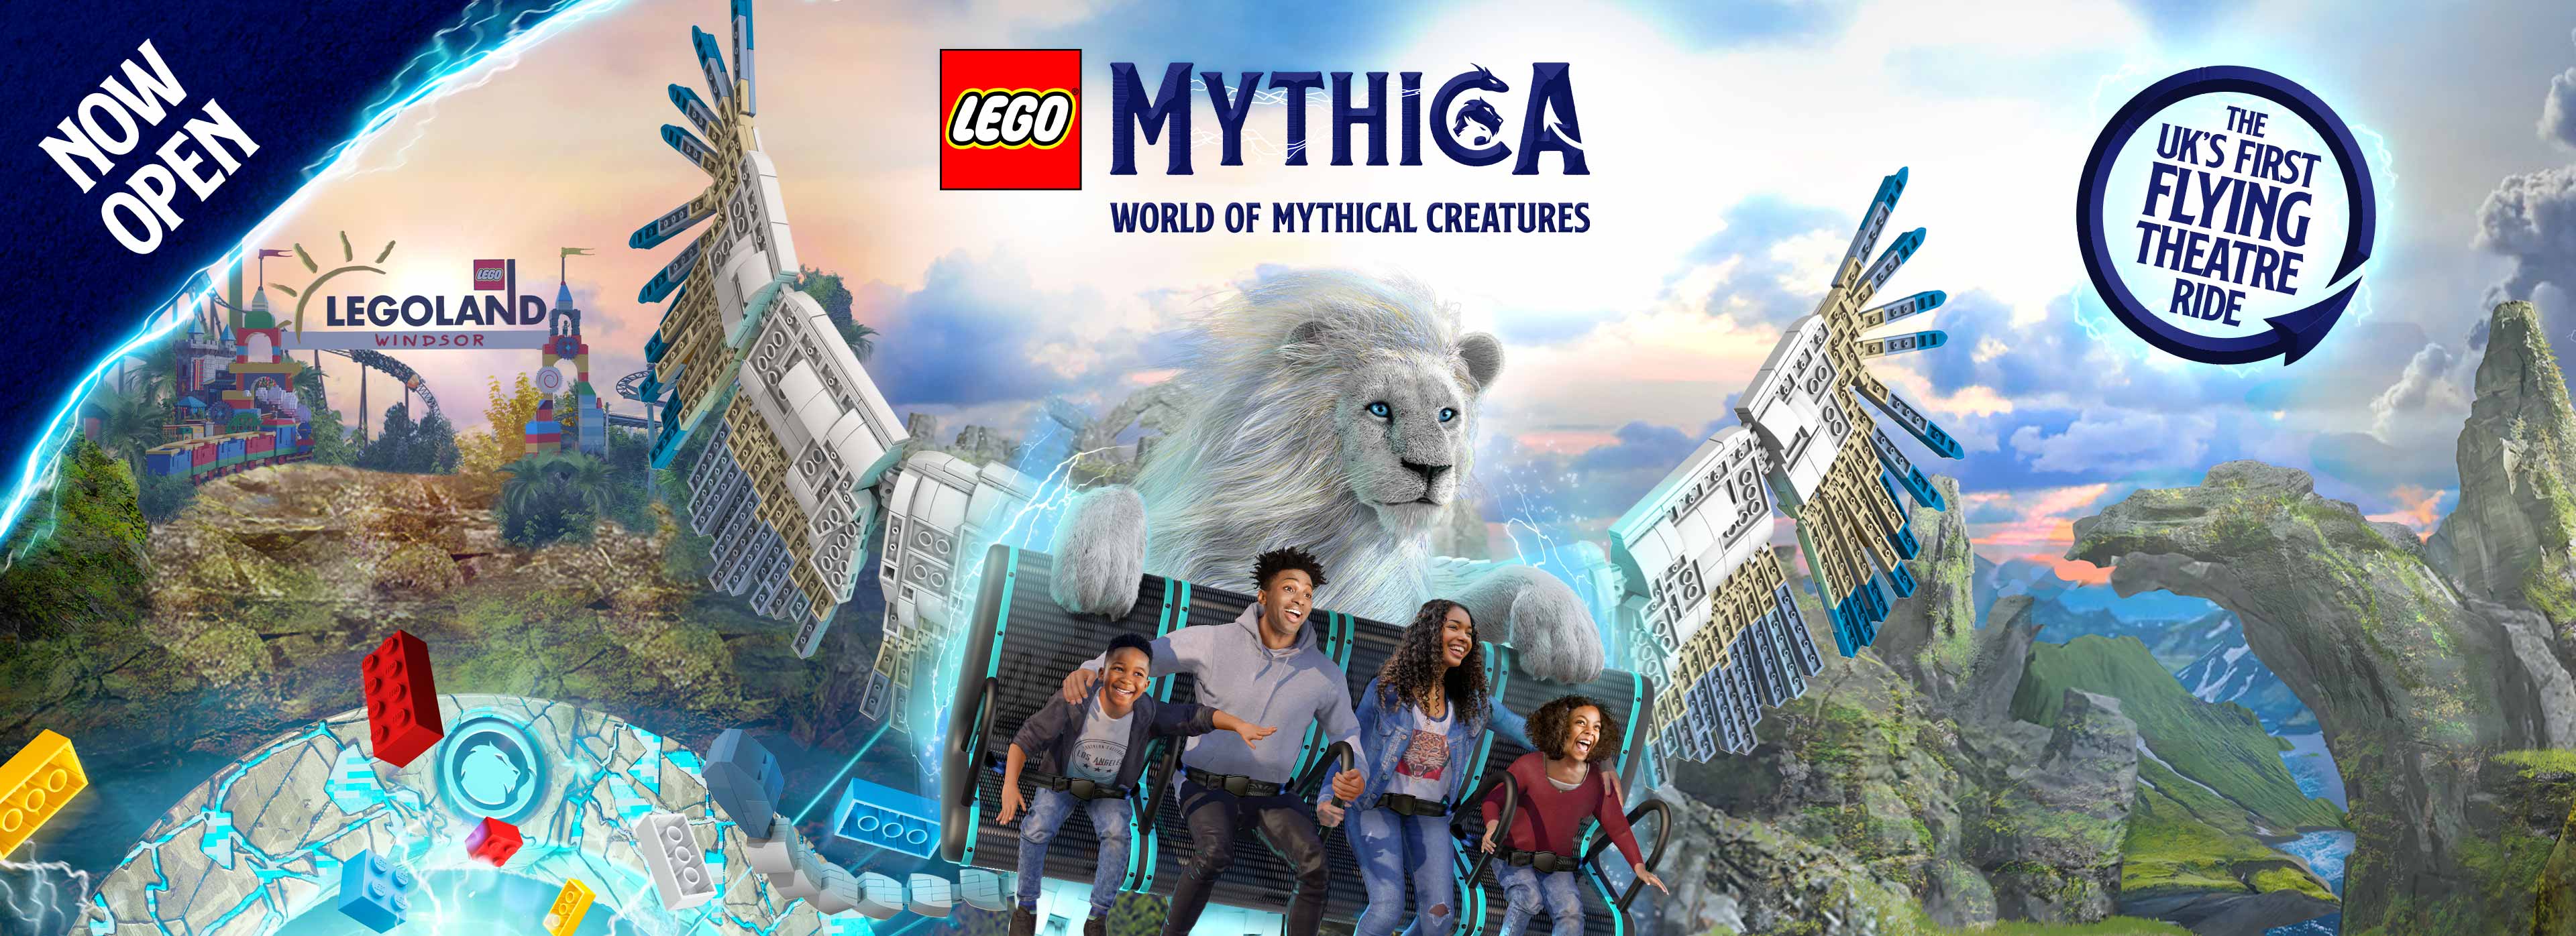 LEGO MYTHICA: World of Mythical Creatures at the LEGOLAND Windsor Resort